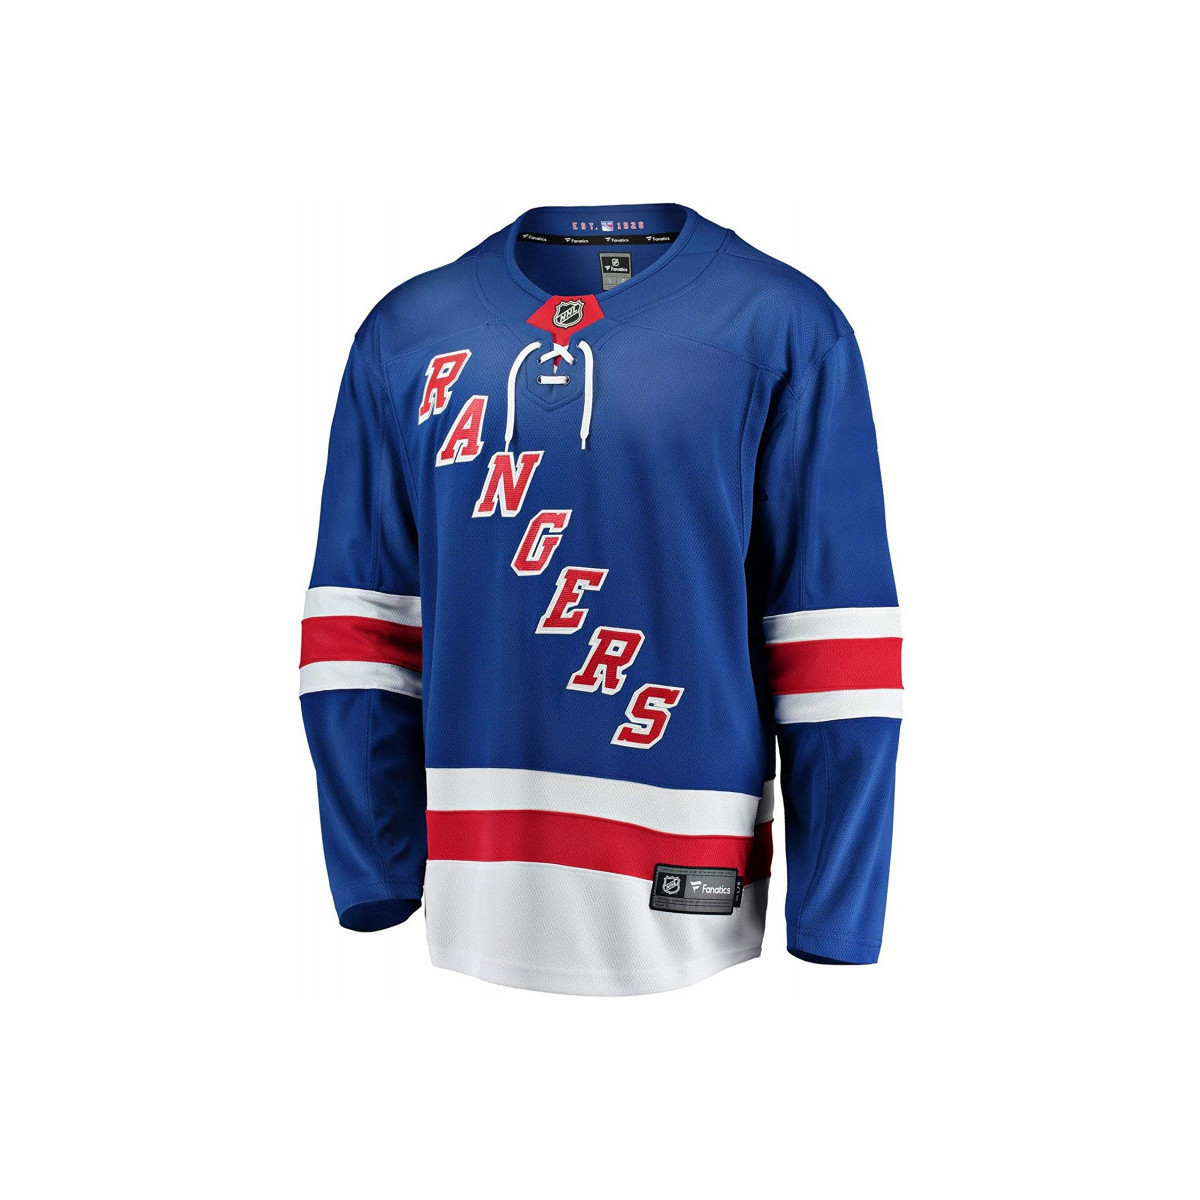 Vêtements T-shirts manches longues Fanatics Maillot NHL New York Rangers F Multicolore